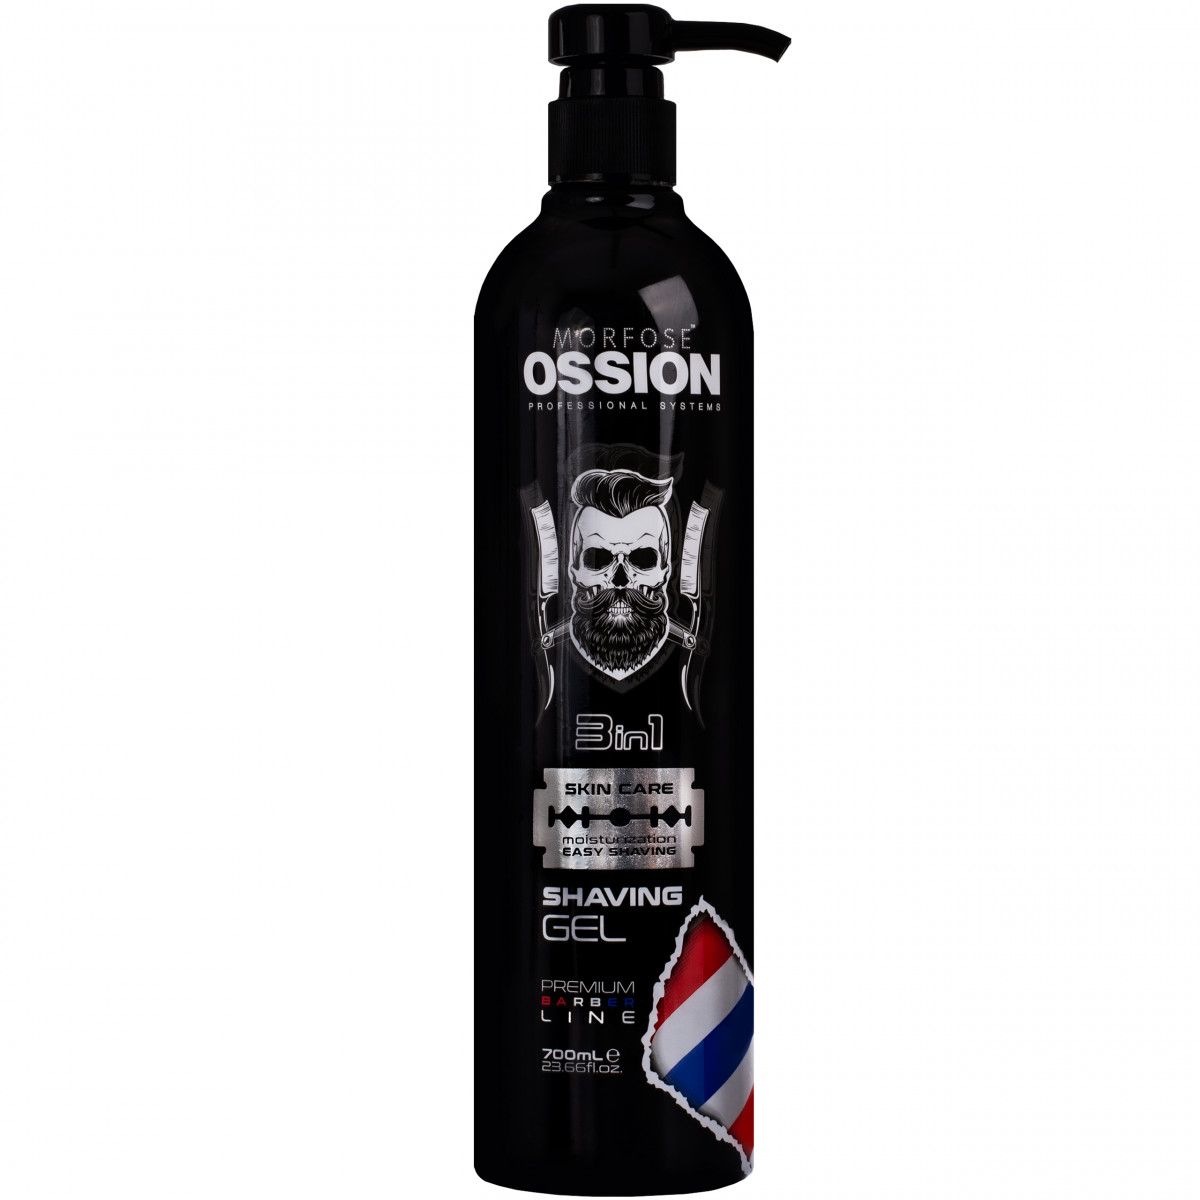 Morfose Ossion Premium Barber Line Shaving Gel 3in1 – delikatny żel do golenia 3w1, 700ml